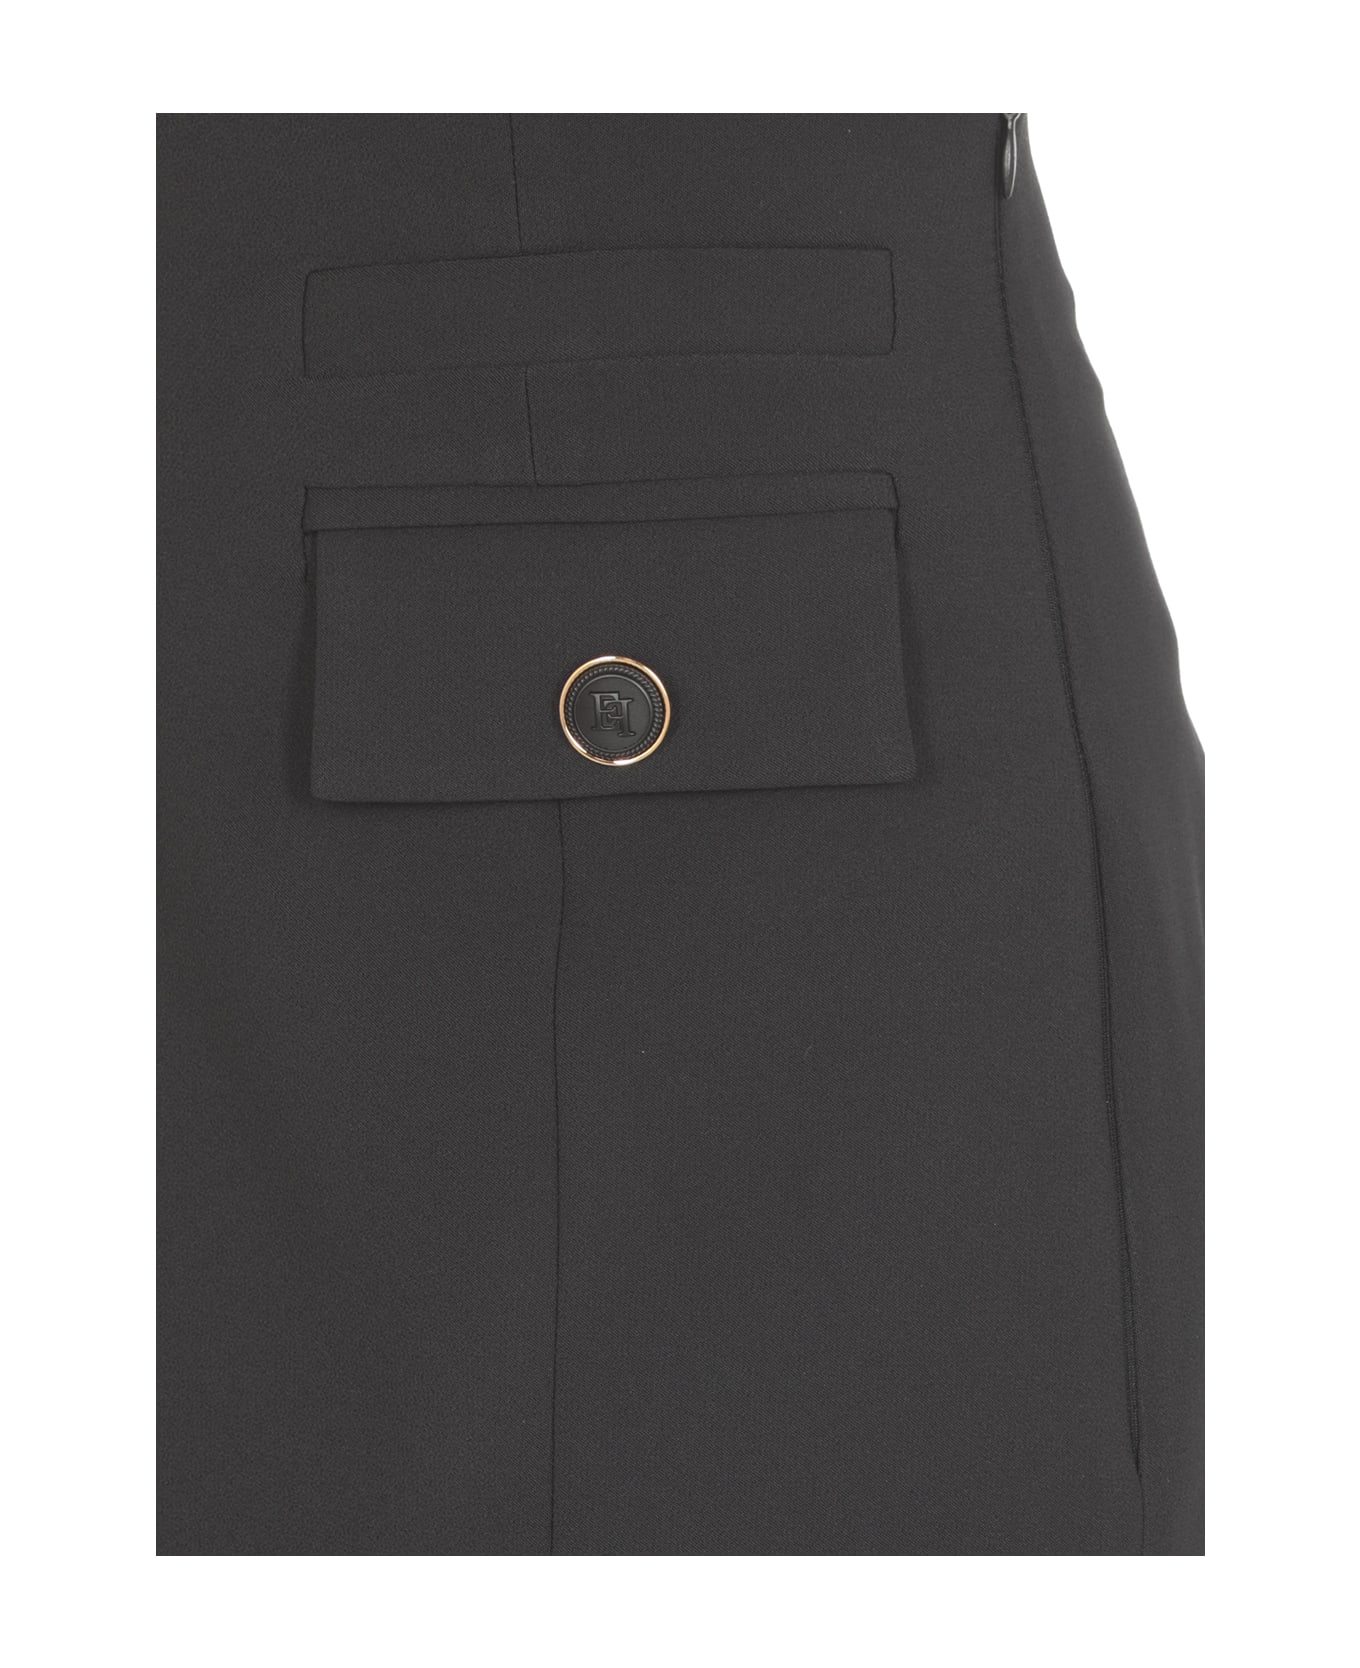 Elisabetta Franchi Crepe Miniskirt - Black